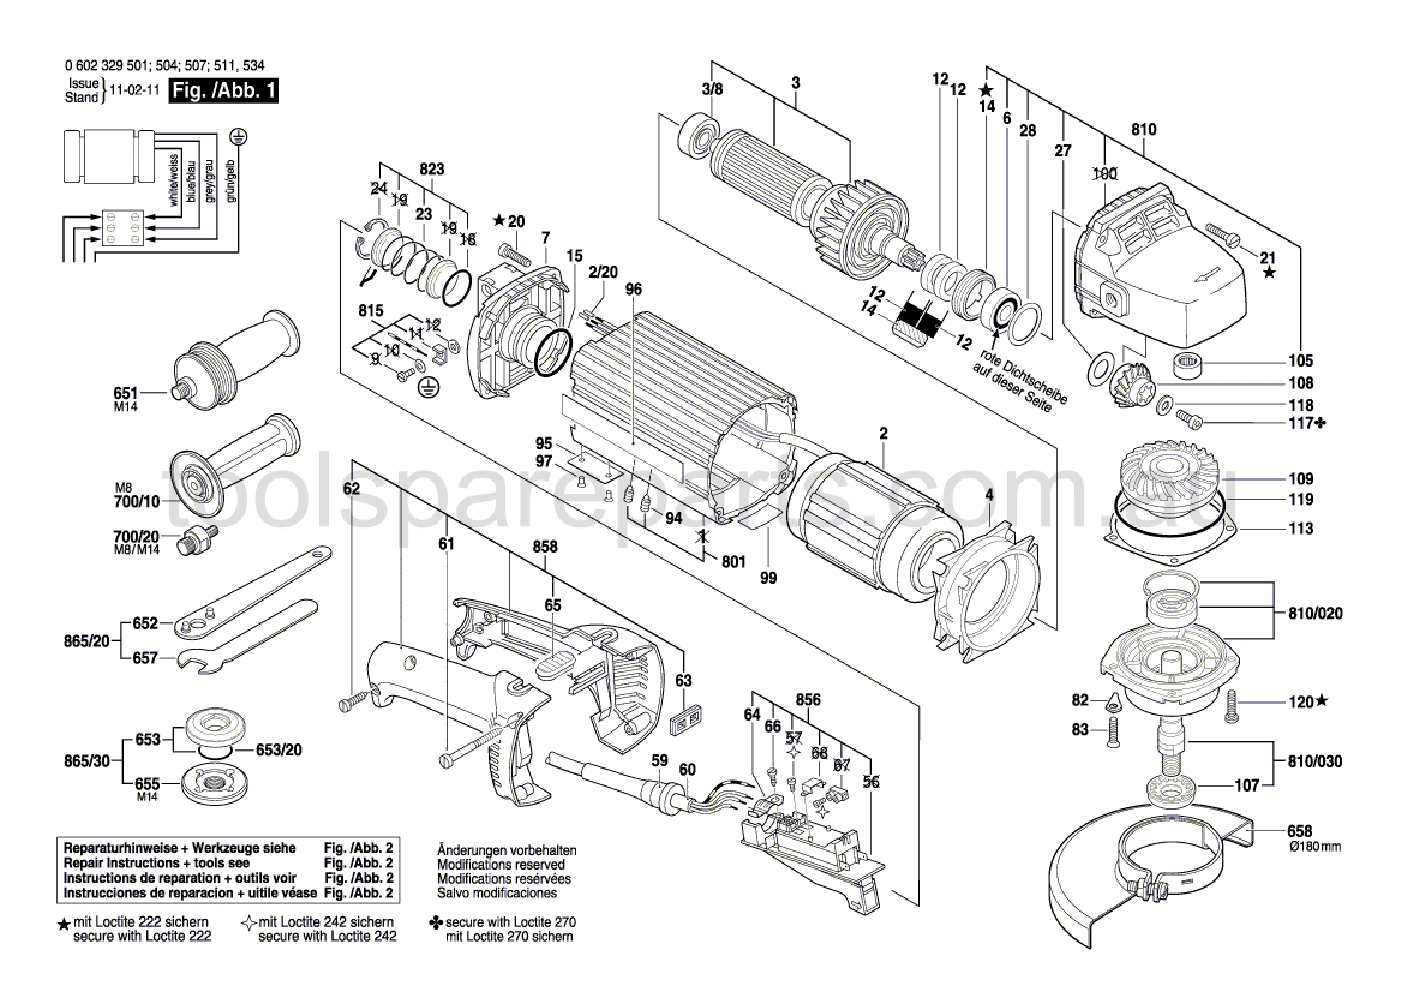 Bosch HWS 85/180 0602329507  Diagram 1